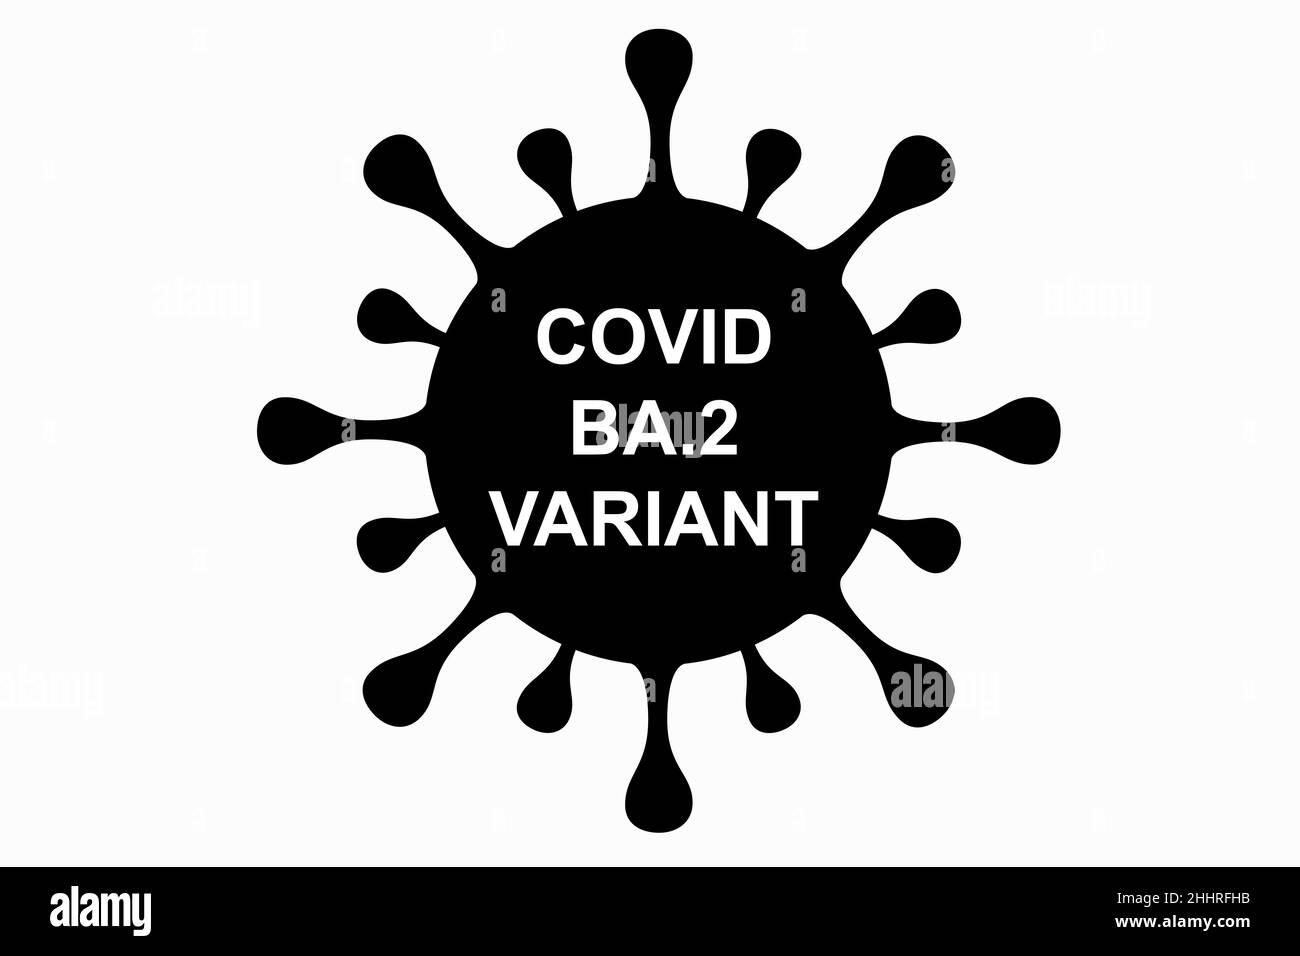 BA.2. New variant of the SARS-CoV-2 coronavirus. Subvariant of Omicron. Design horizontal. Virus design and black text. Stock Photo